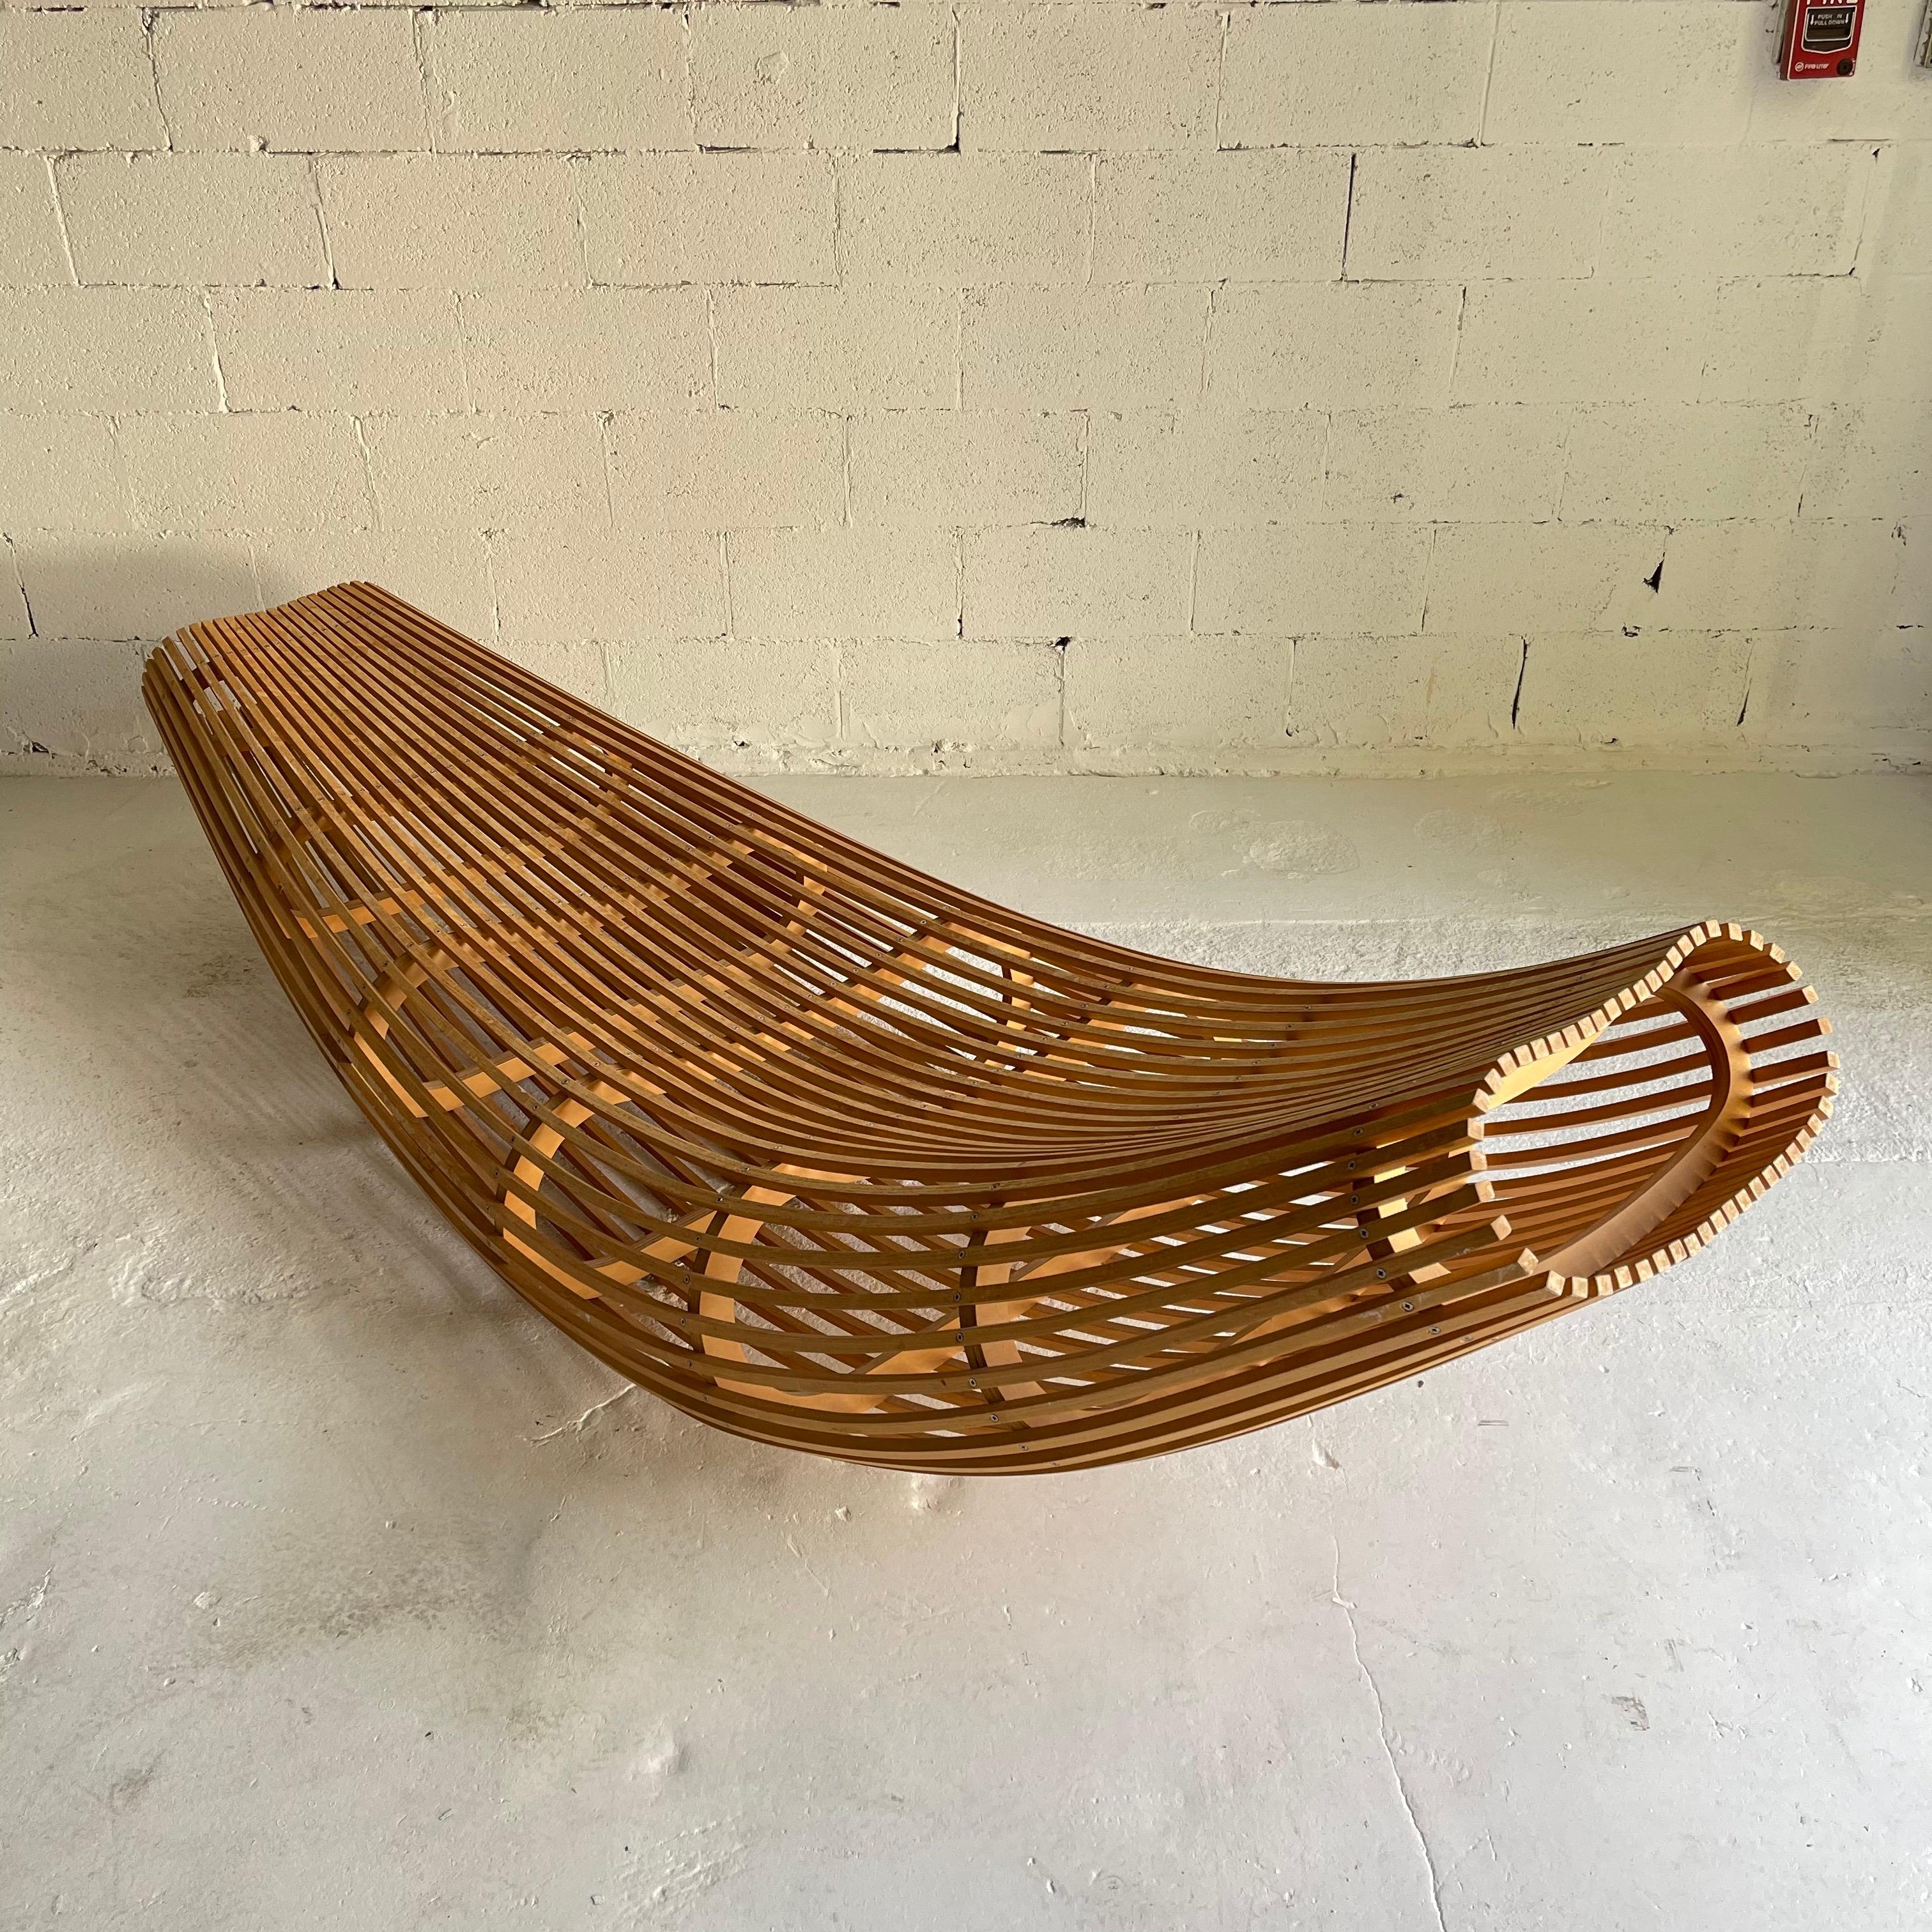 Contemporary Rare David Trubridge “Body Raft” Chaise Lounge, New Zealand, 2000